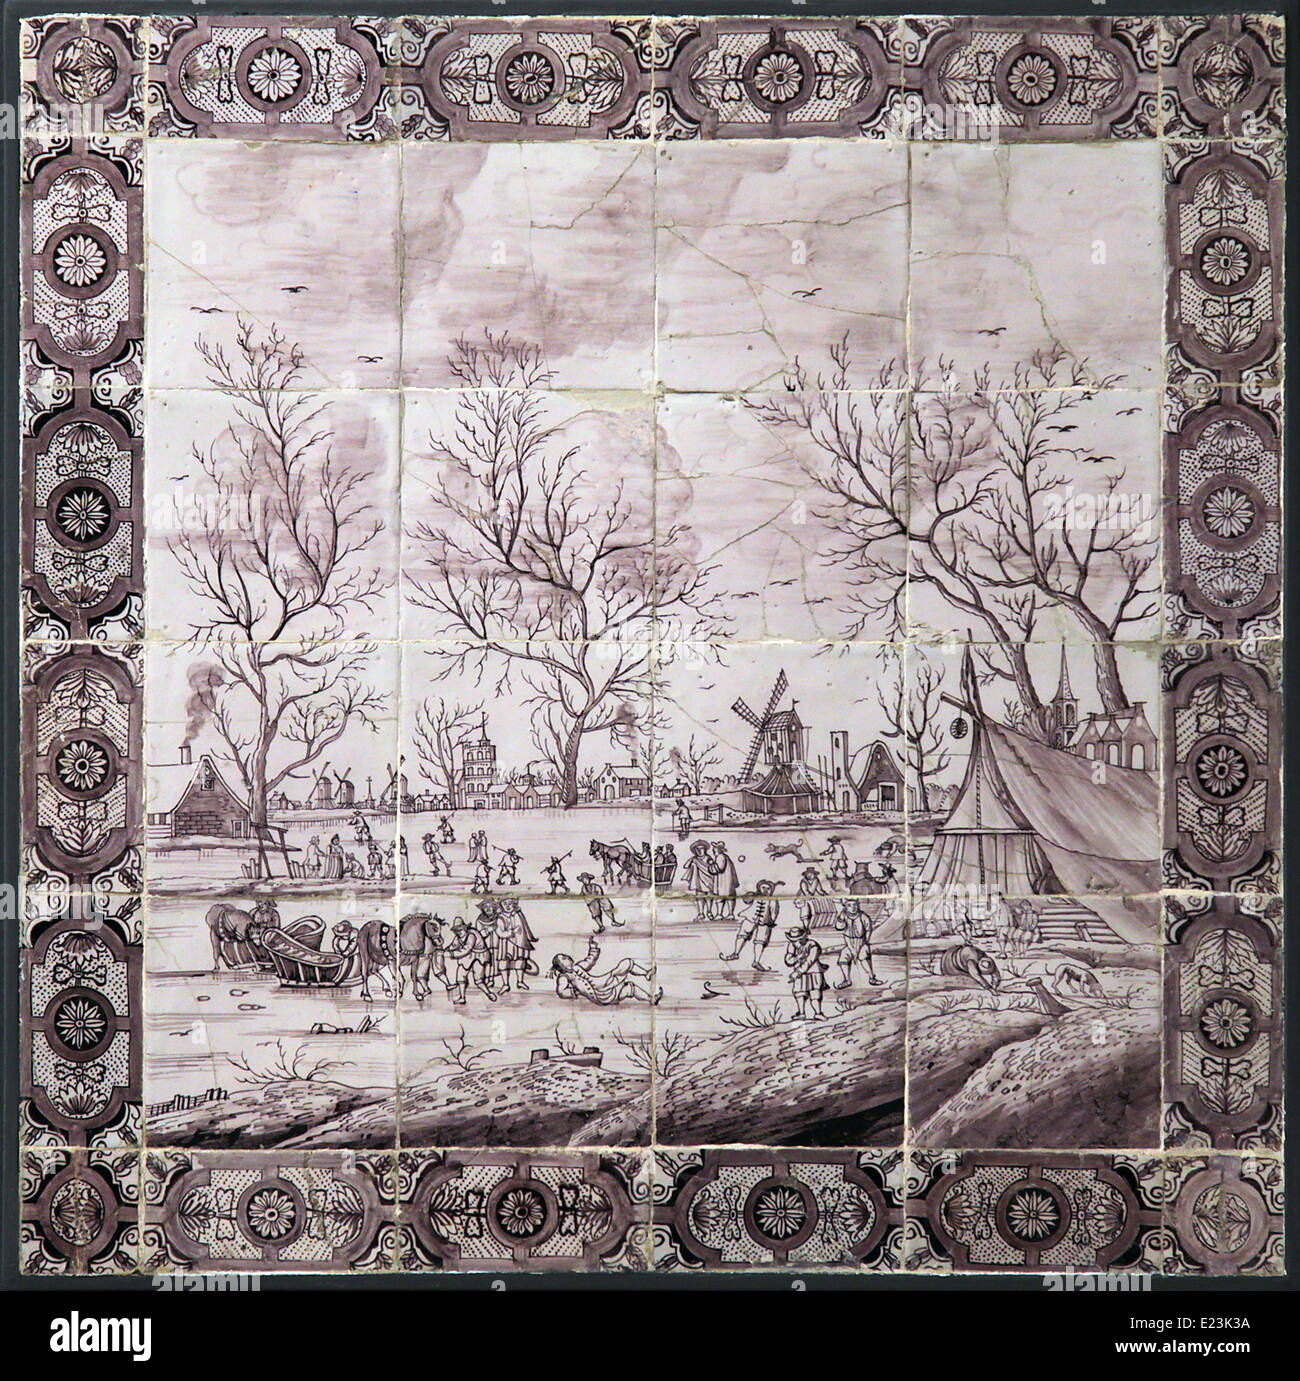 tiles tile-tableau.winterlandscape.holland.amsterdam.1800-1920 Stock Photo